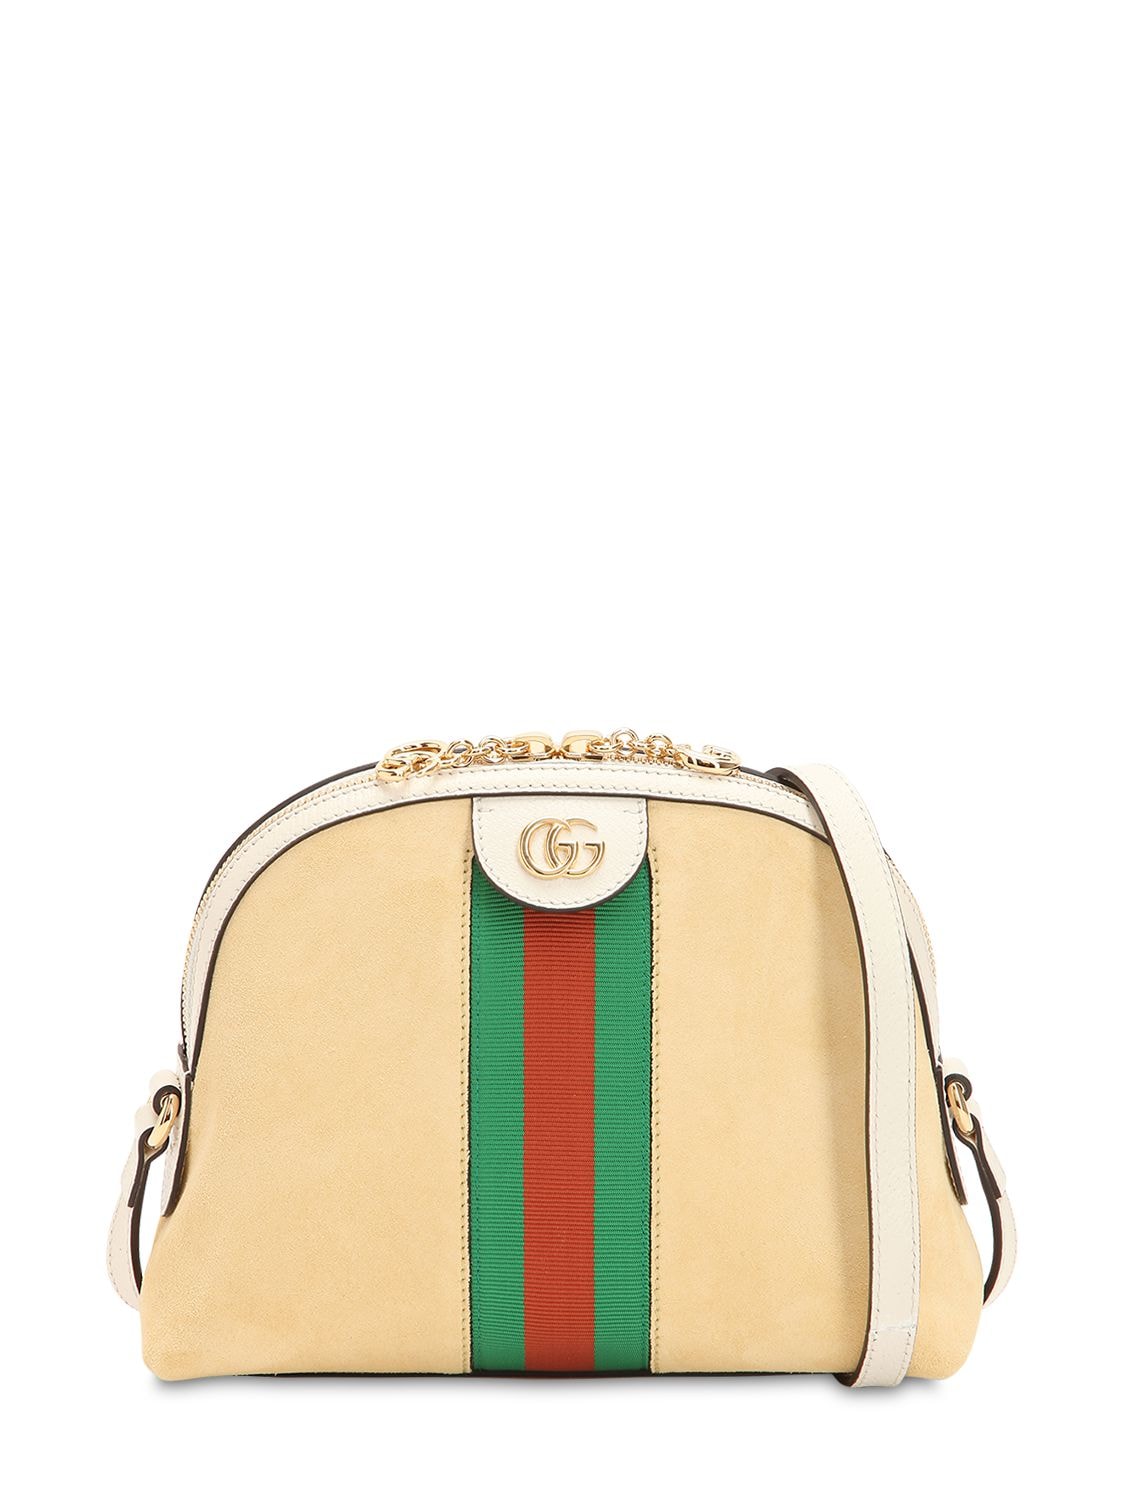 Gucci Ophidia Suede Shoulder Bag In Cream